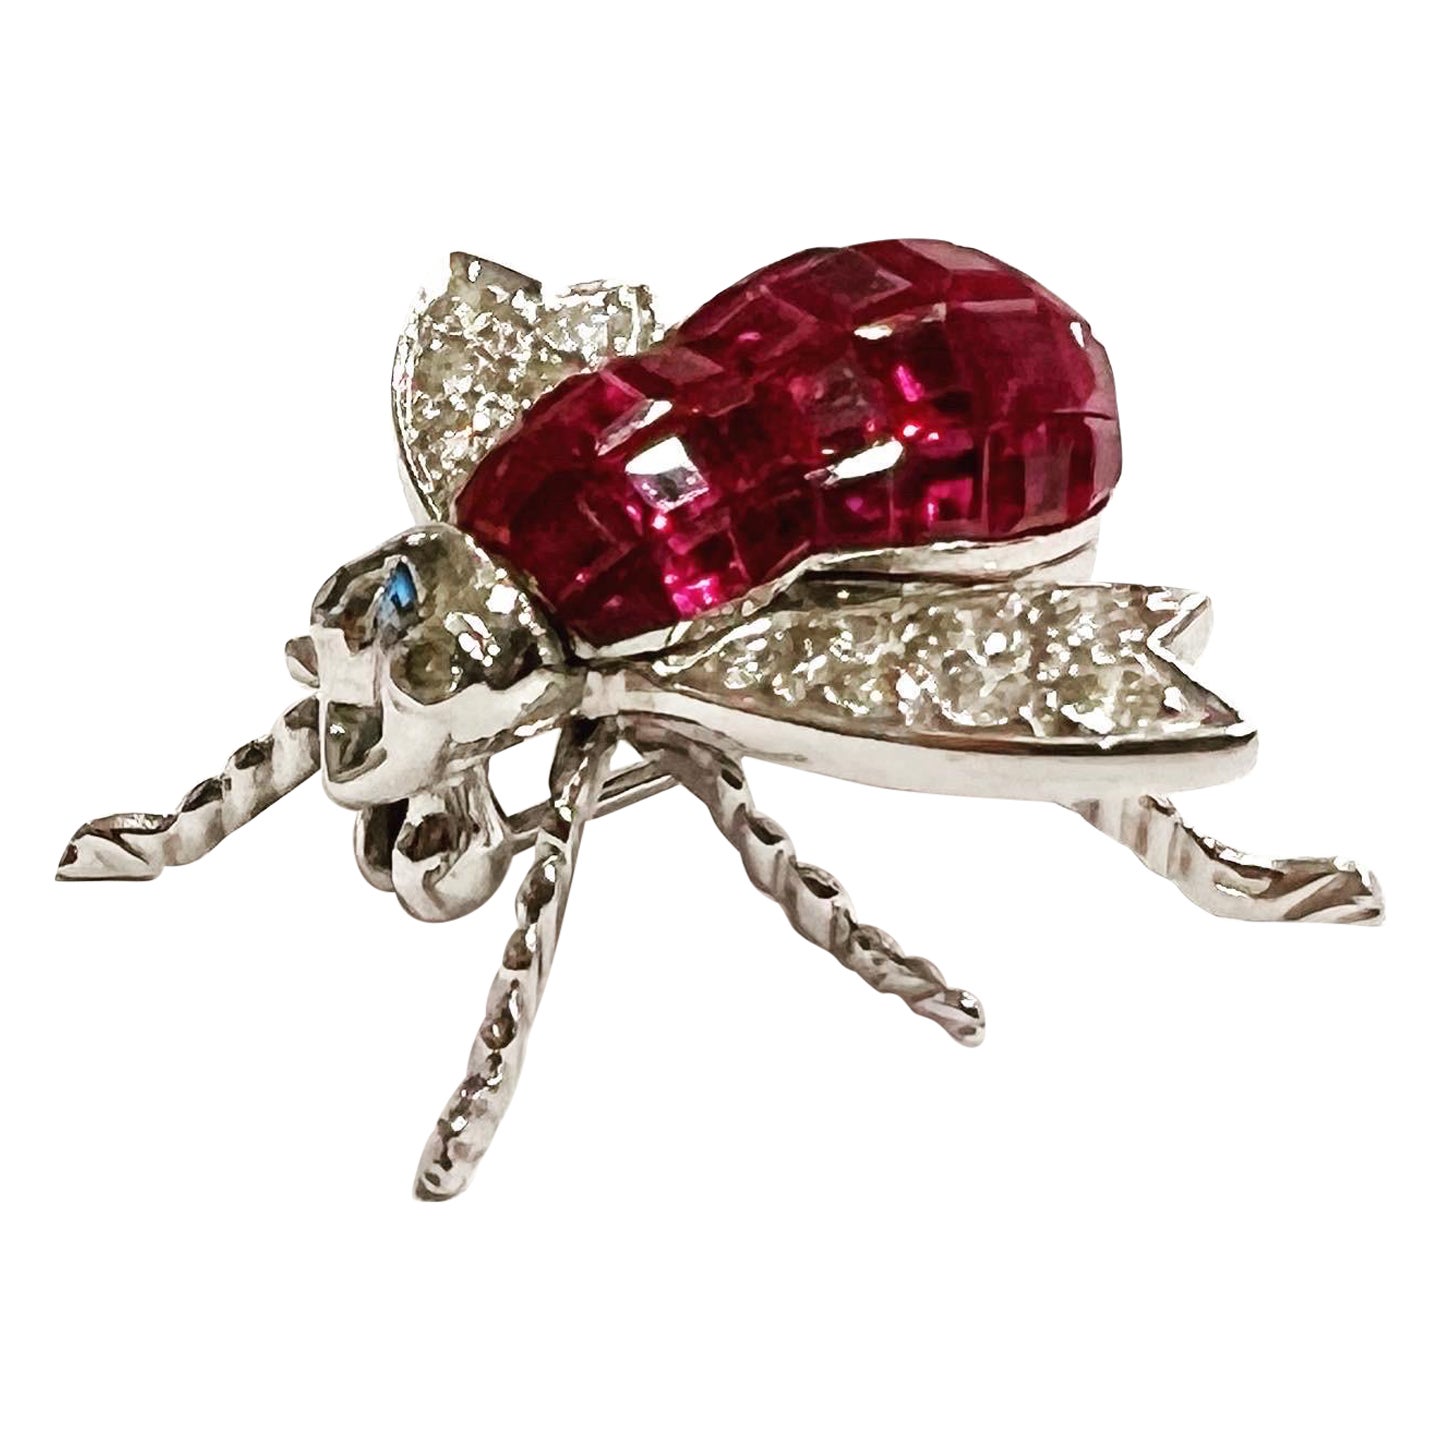  18k White Gold, Pavé Setting Ruby Diamond Fly Bee Brooch